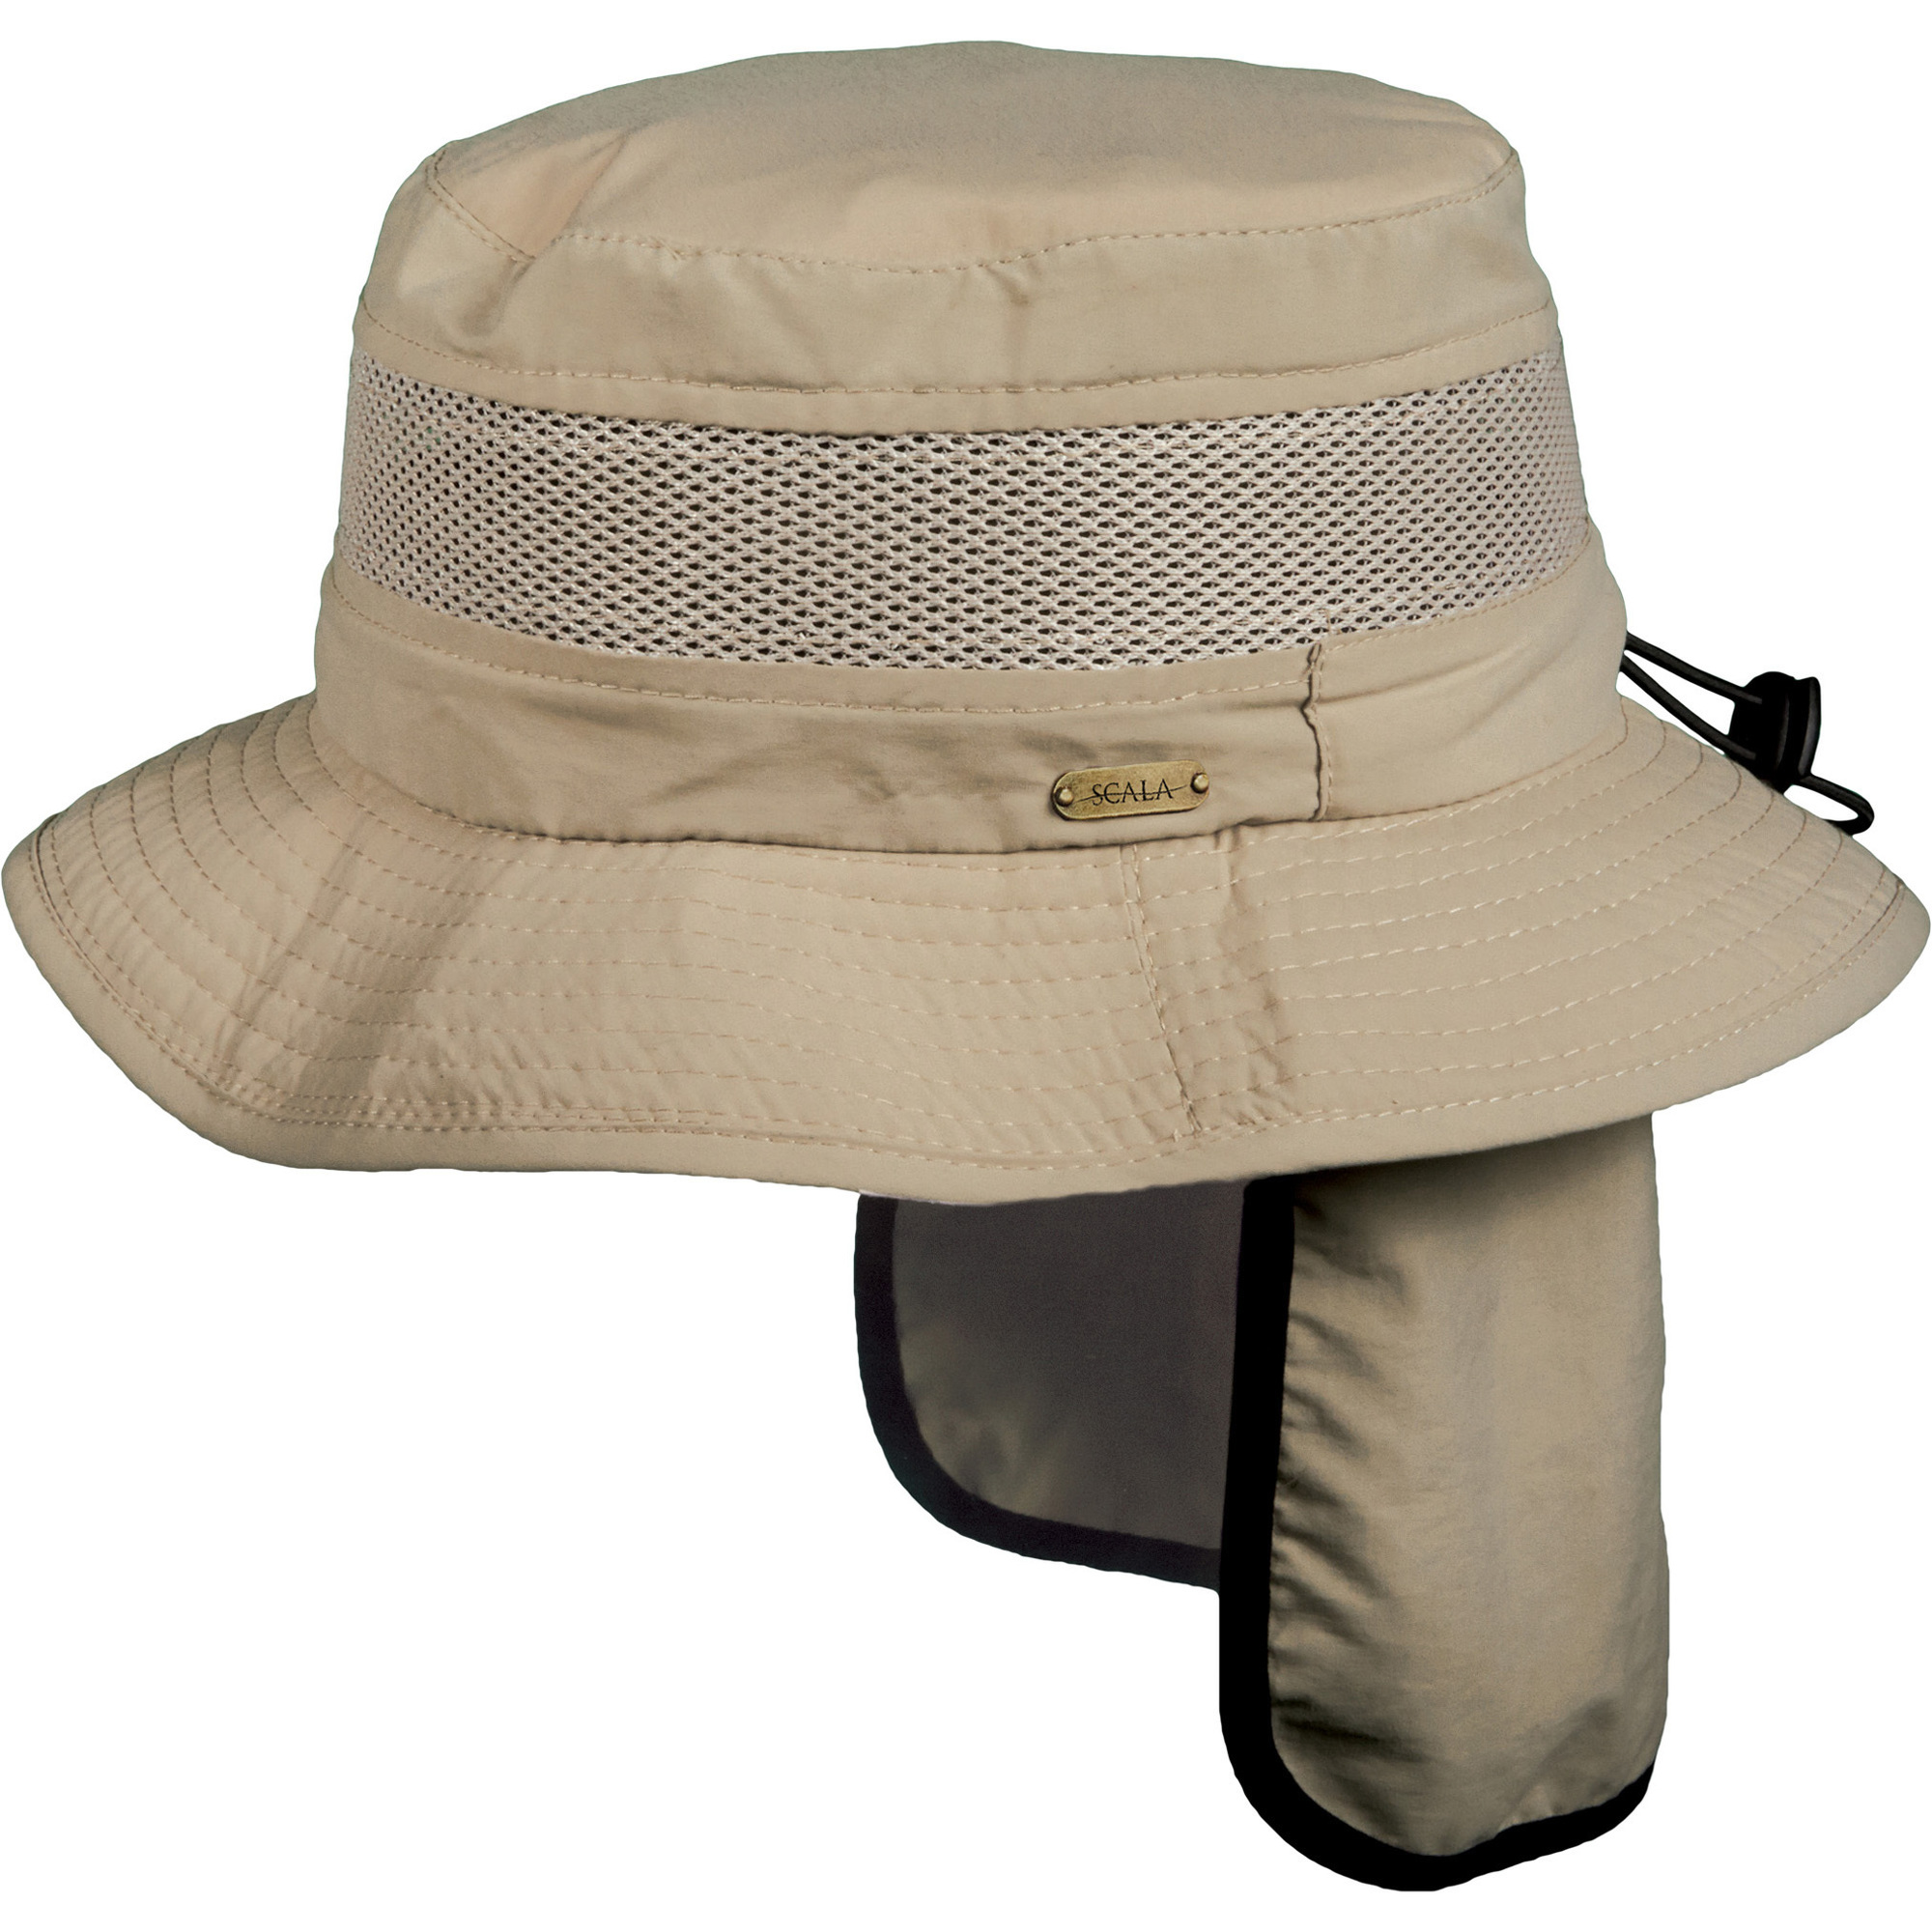 Dorfman Pacific, No Fly Zone Nylon Bug Repellent Hat, Size L, Color KHAKI, Hat Style Hat, Model NT199-KAKI3